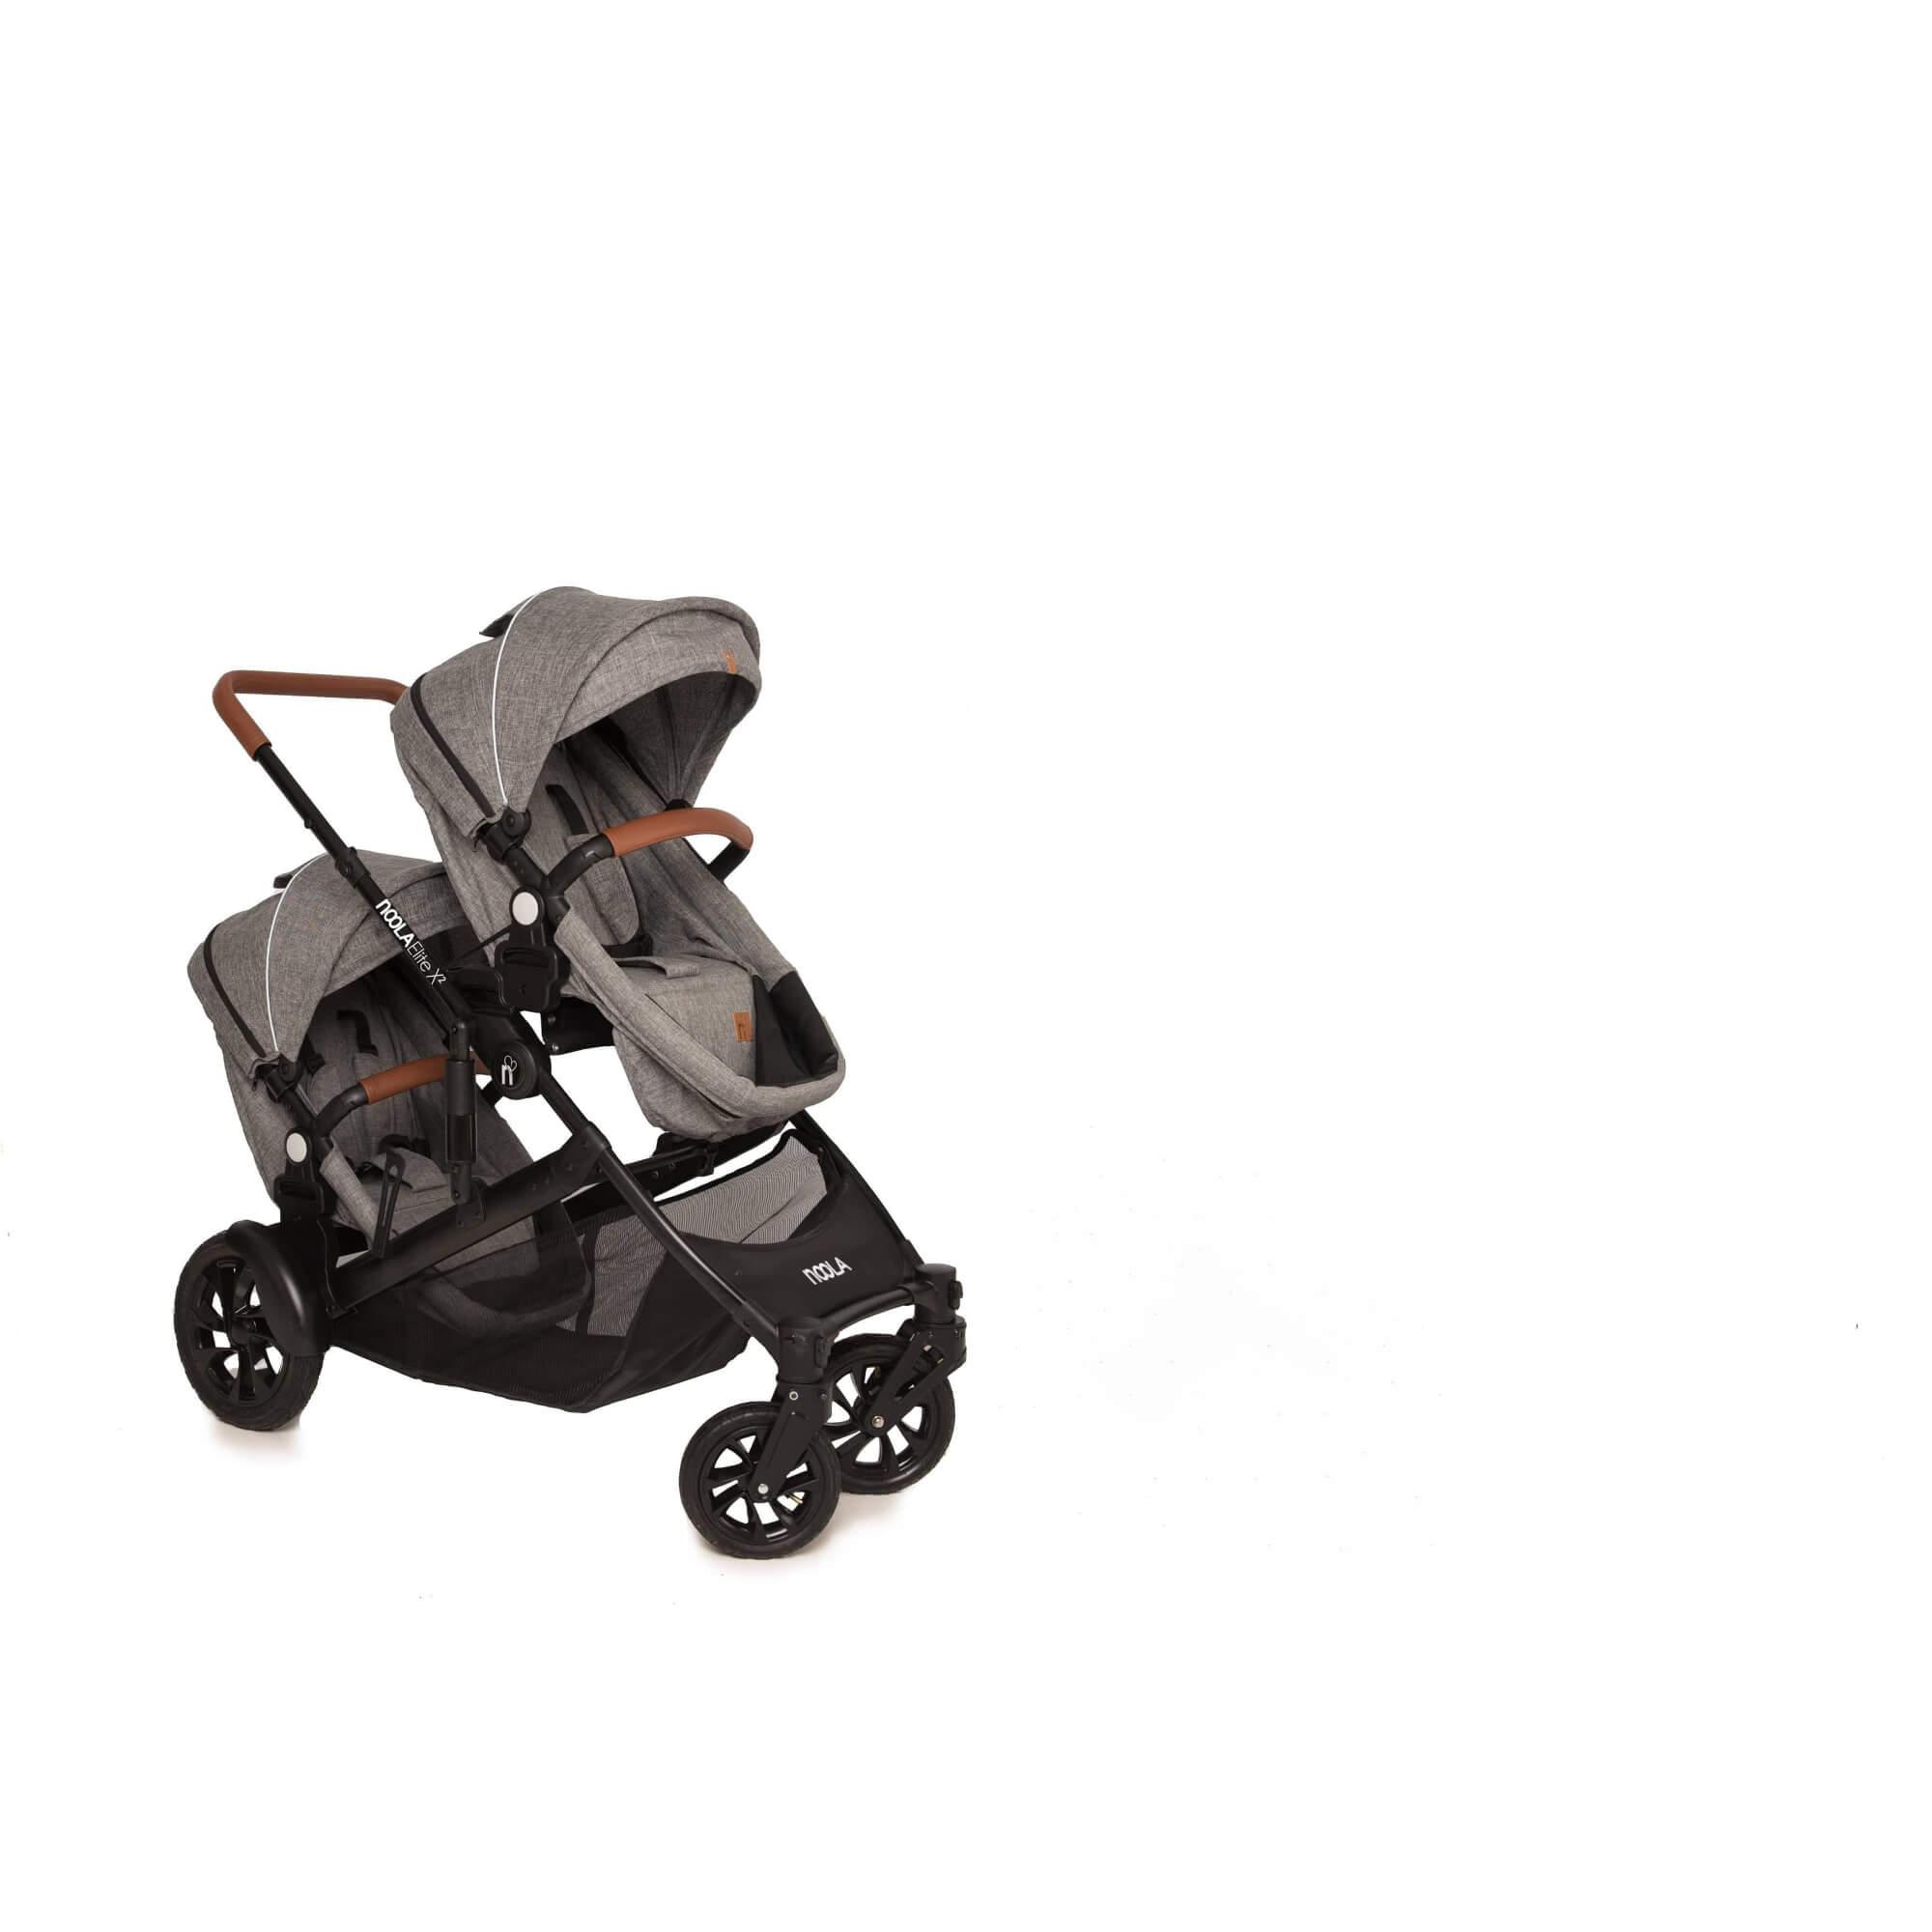 noola elitex2 2in1 twin travel system lunar grey baby stroller